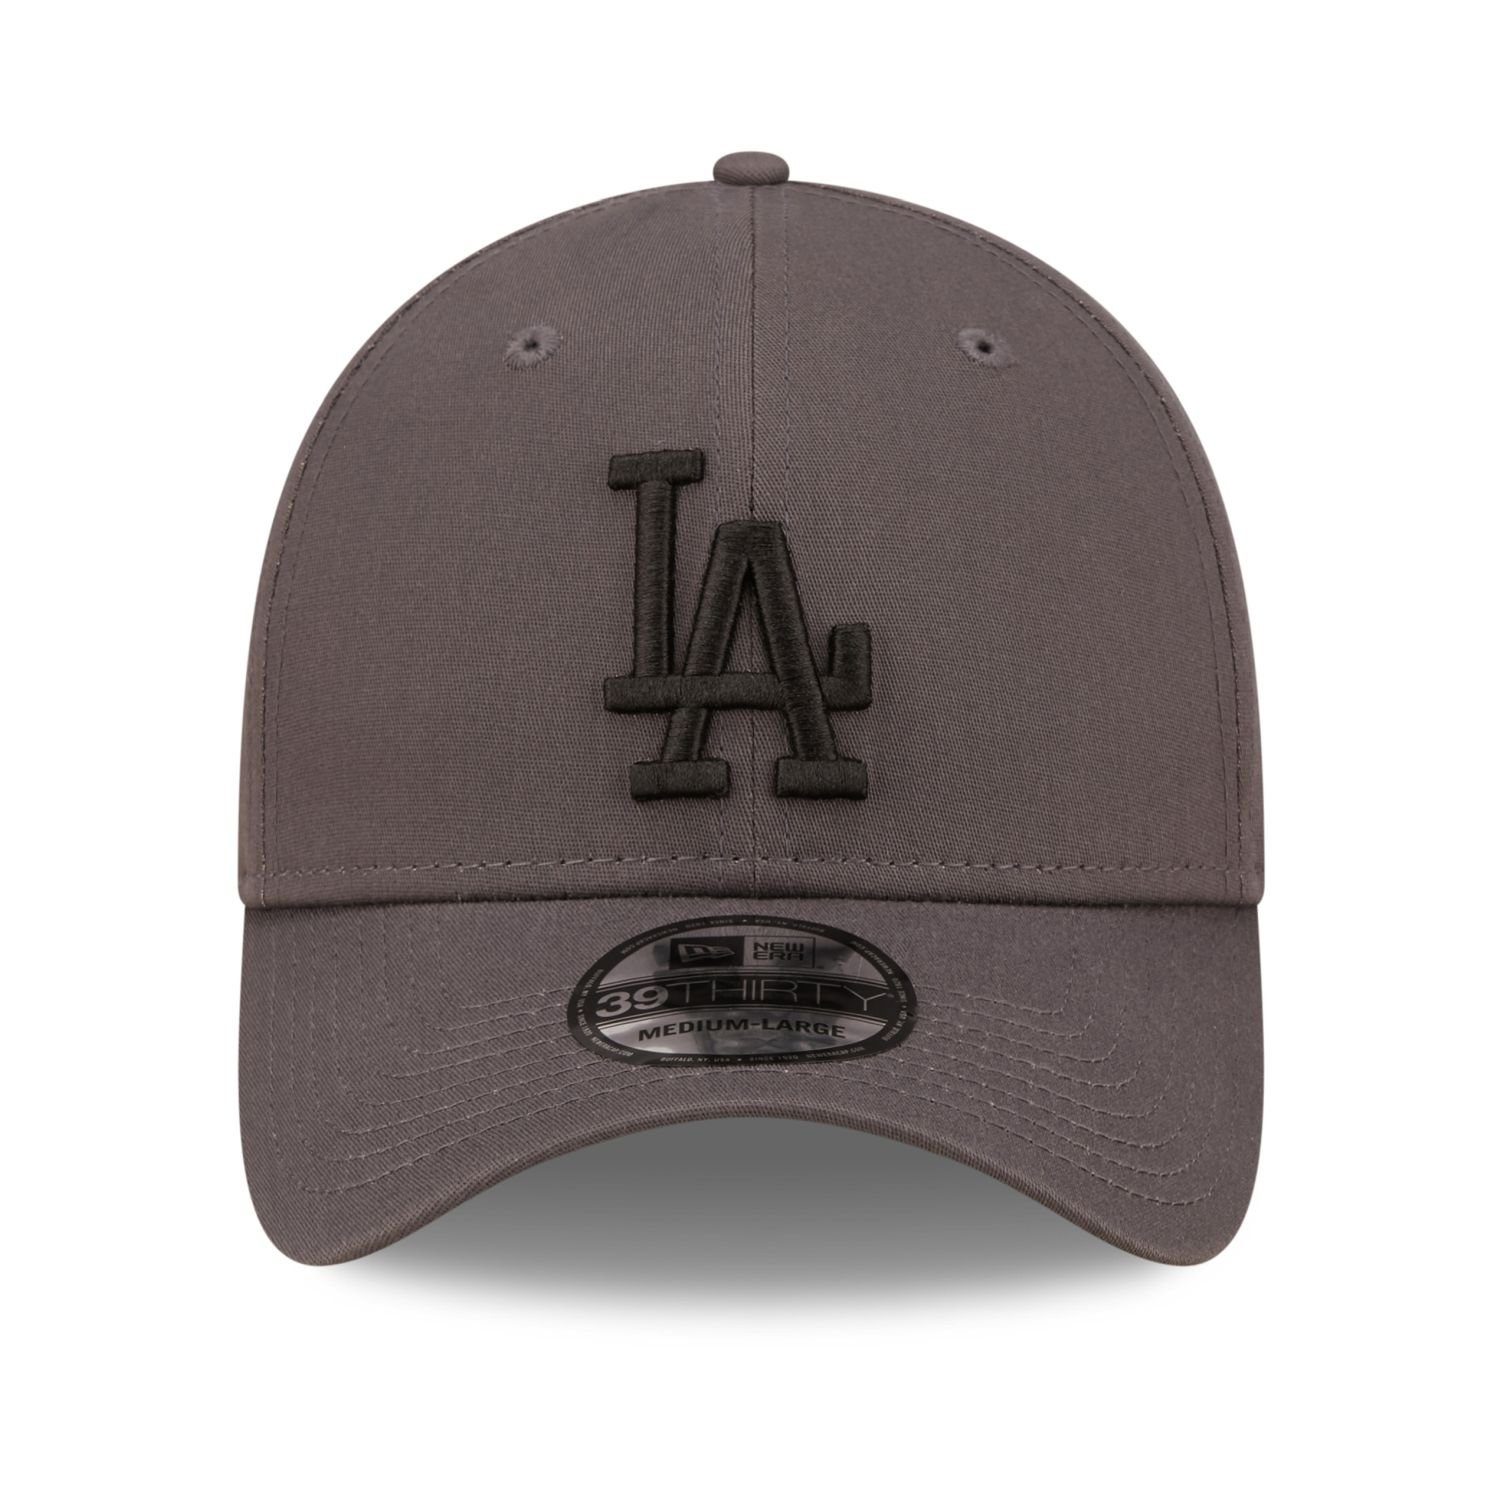 Los Stretch grey Cap 39Thirty Era Flex Dodgers Angeles New